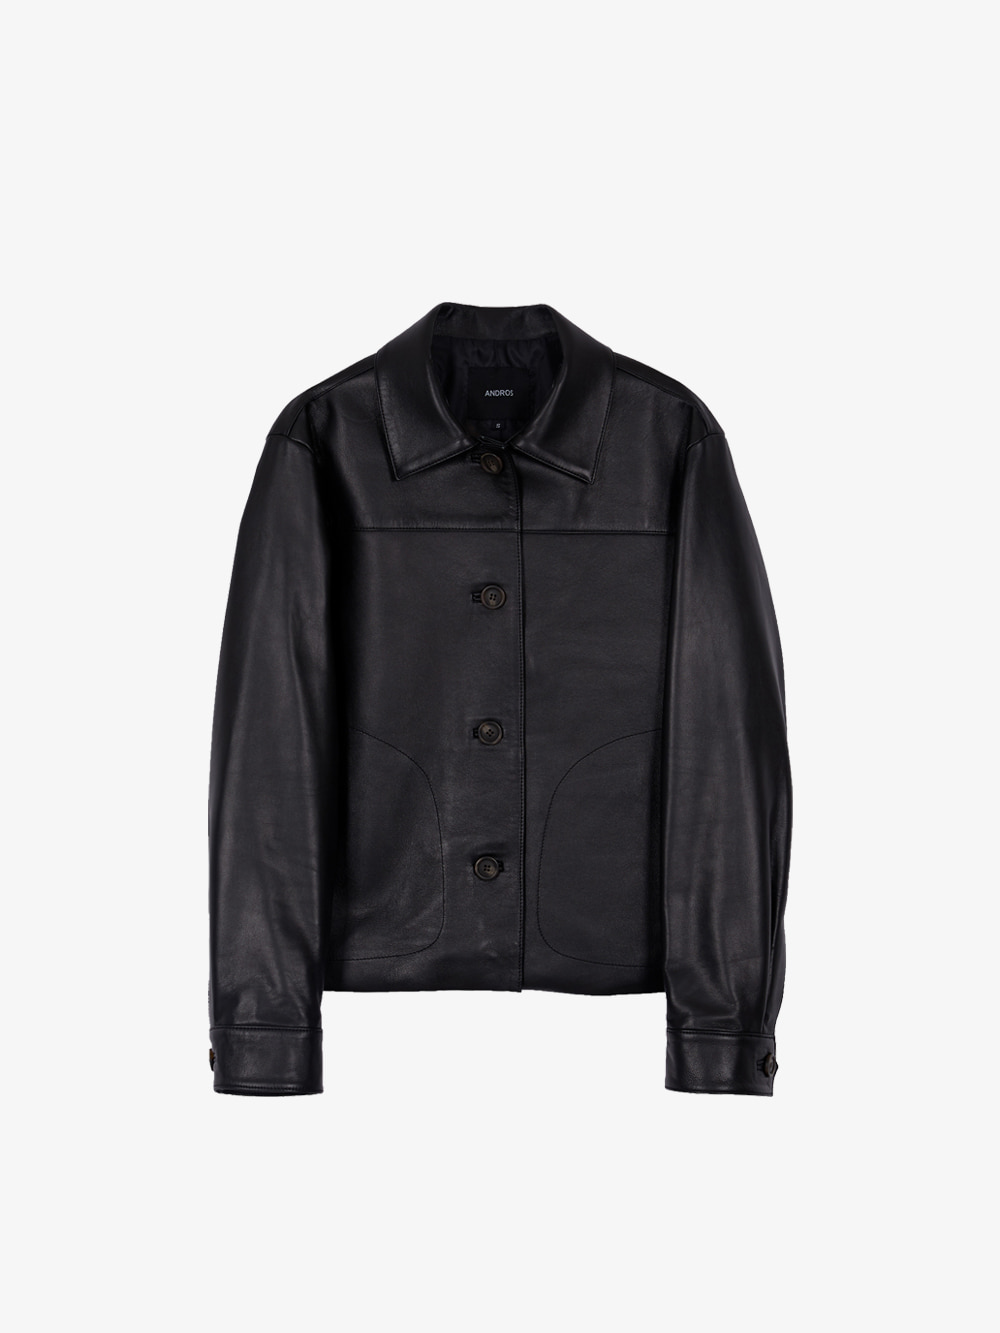 [ESSENTIAL] Bari Crop Leather Jacket